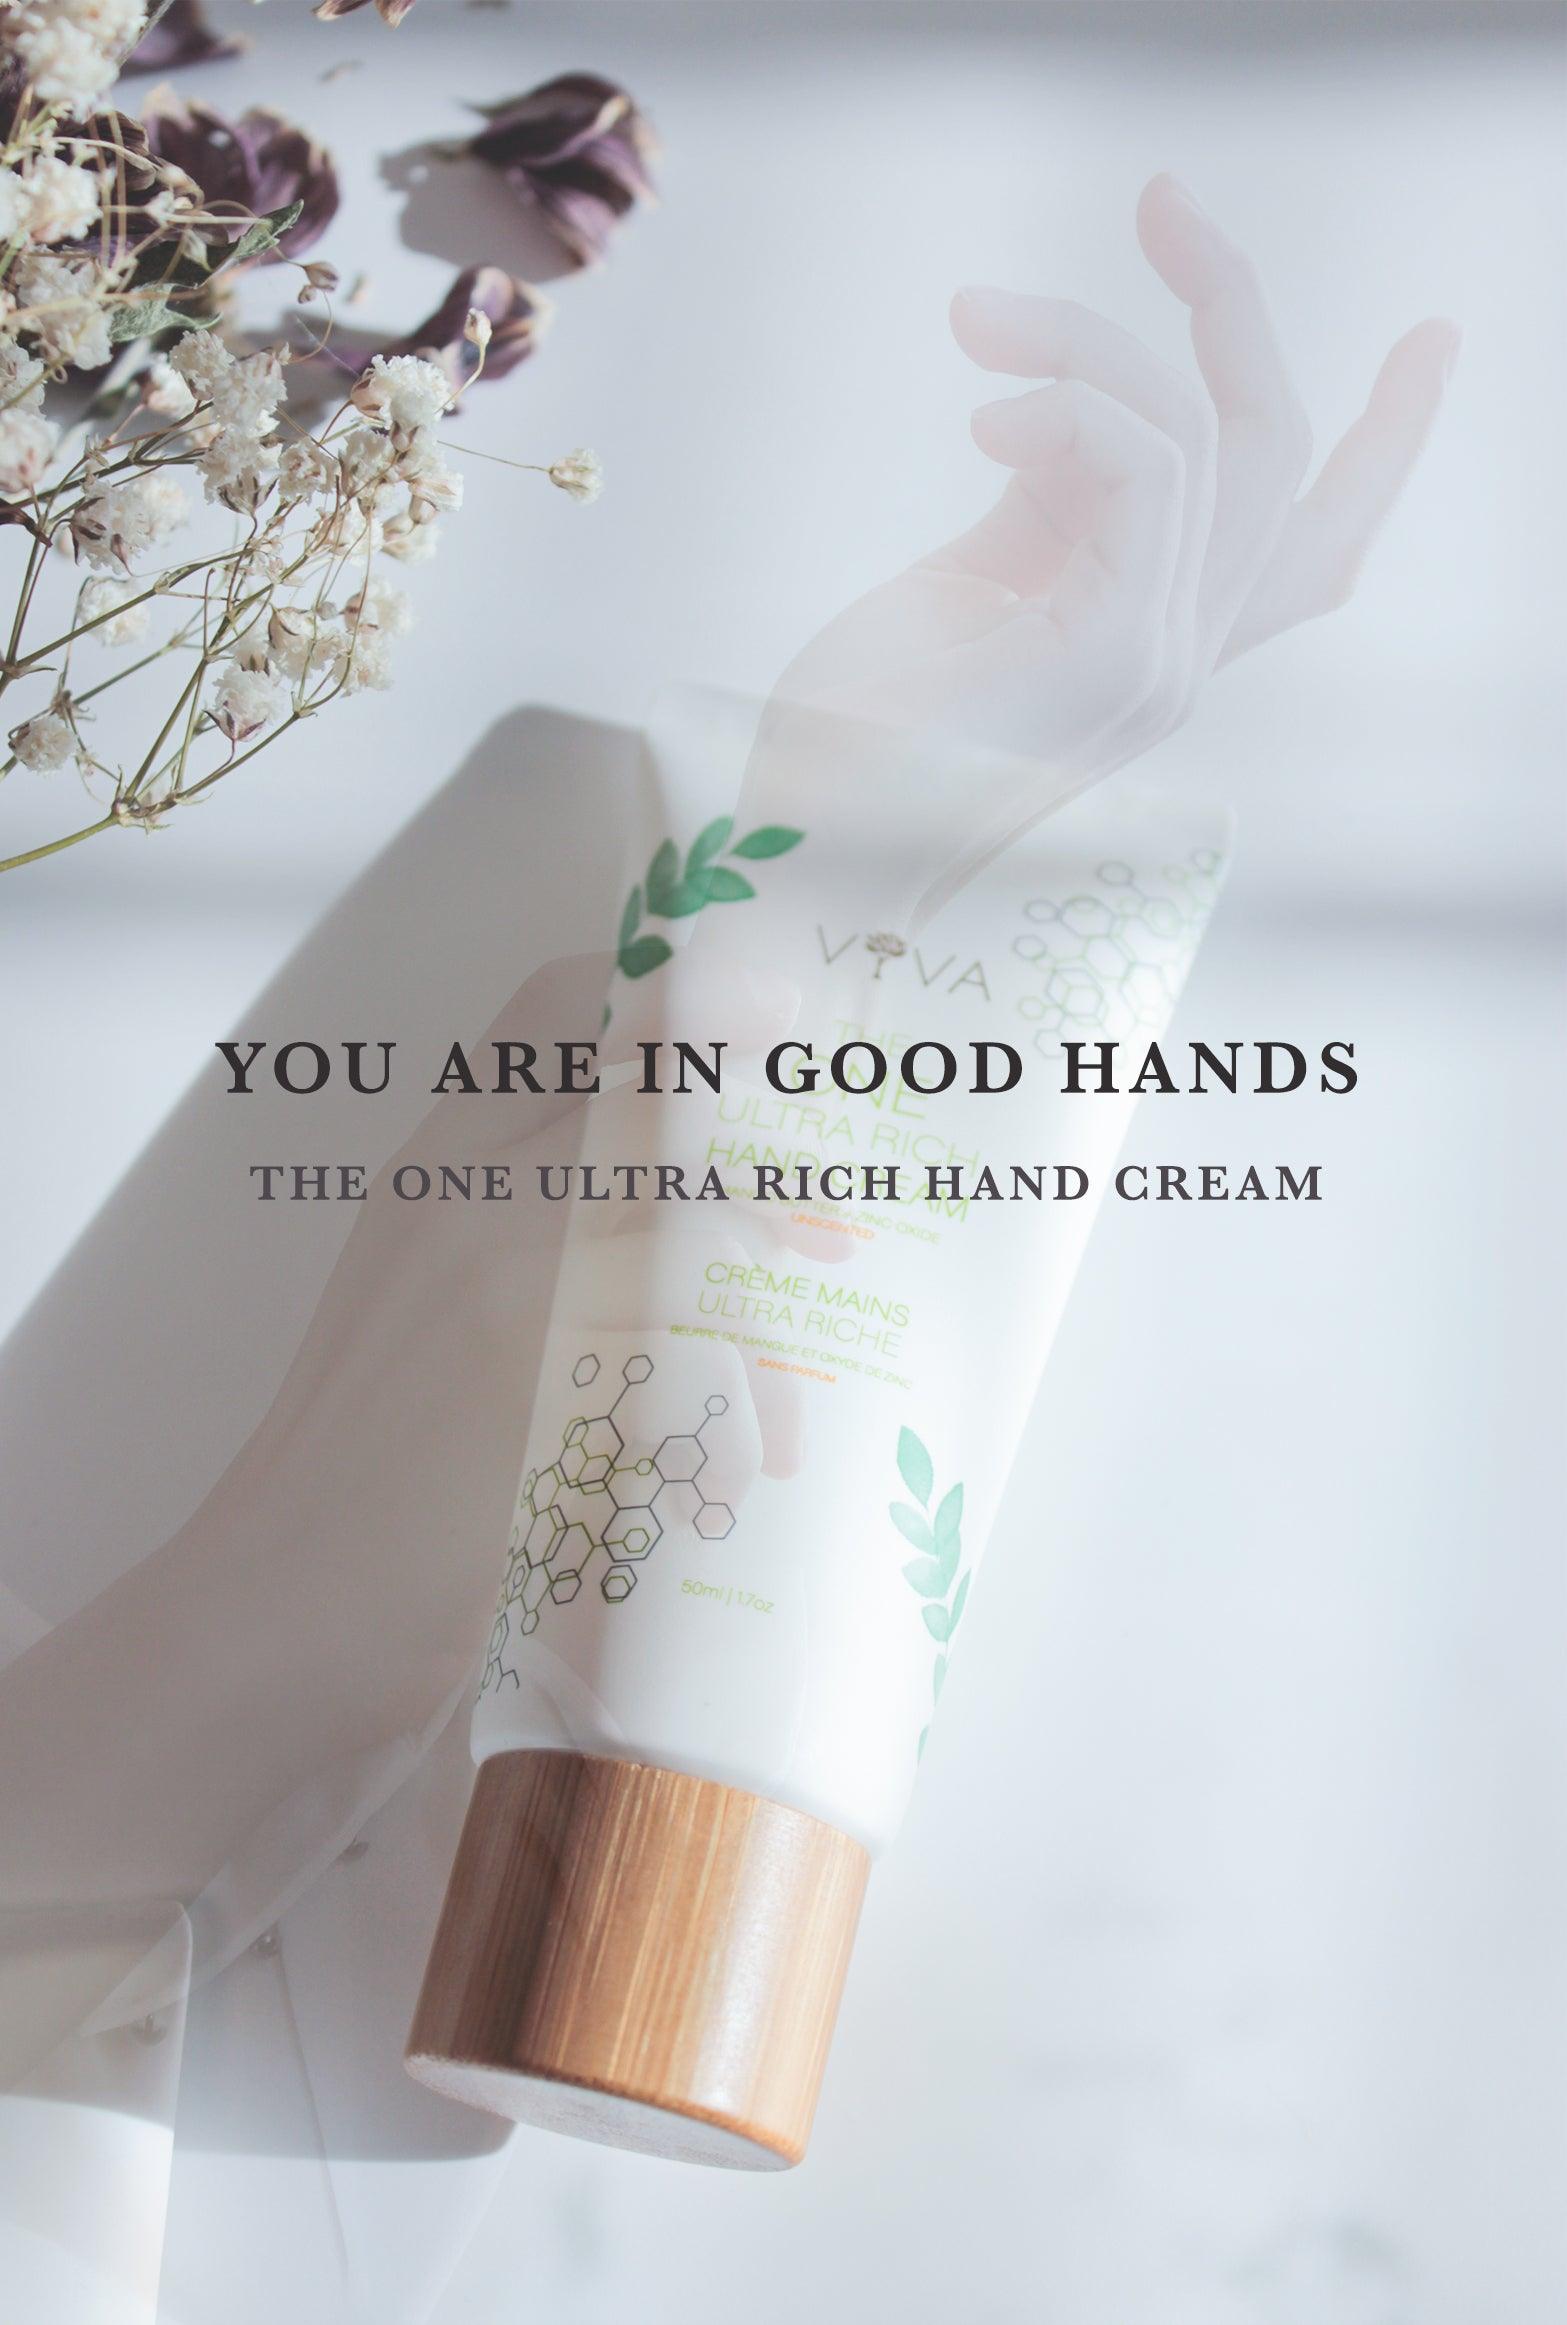 The One Ultra Rich Hand Cream - Viva Health Skincare